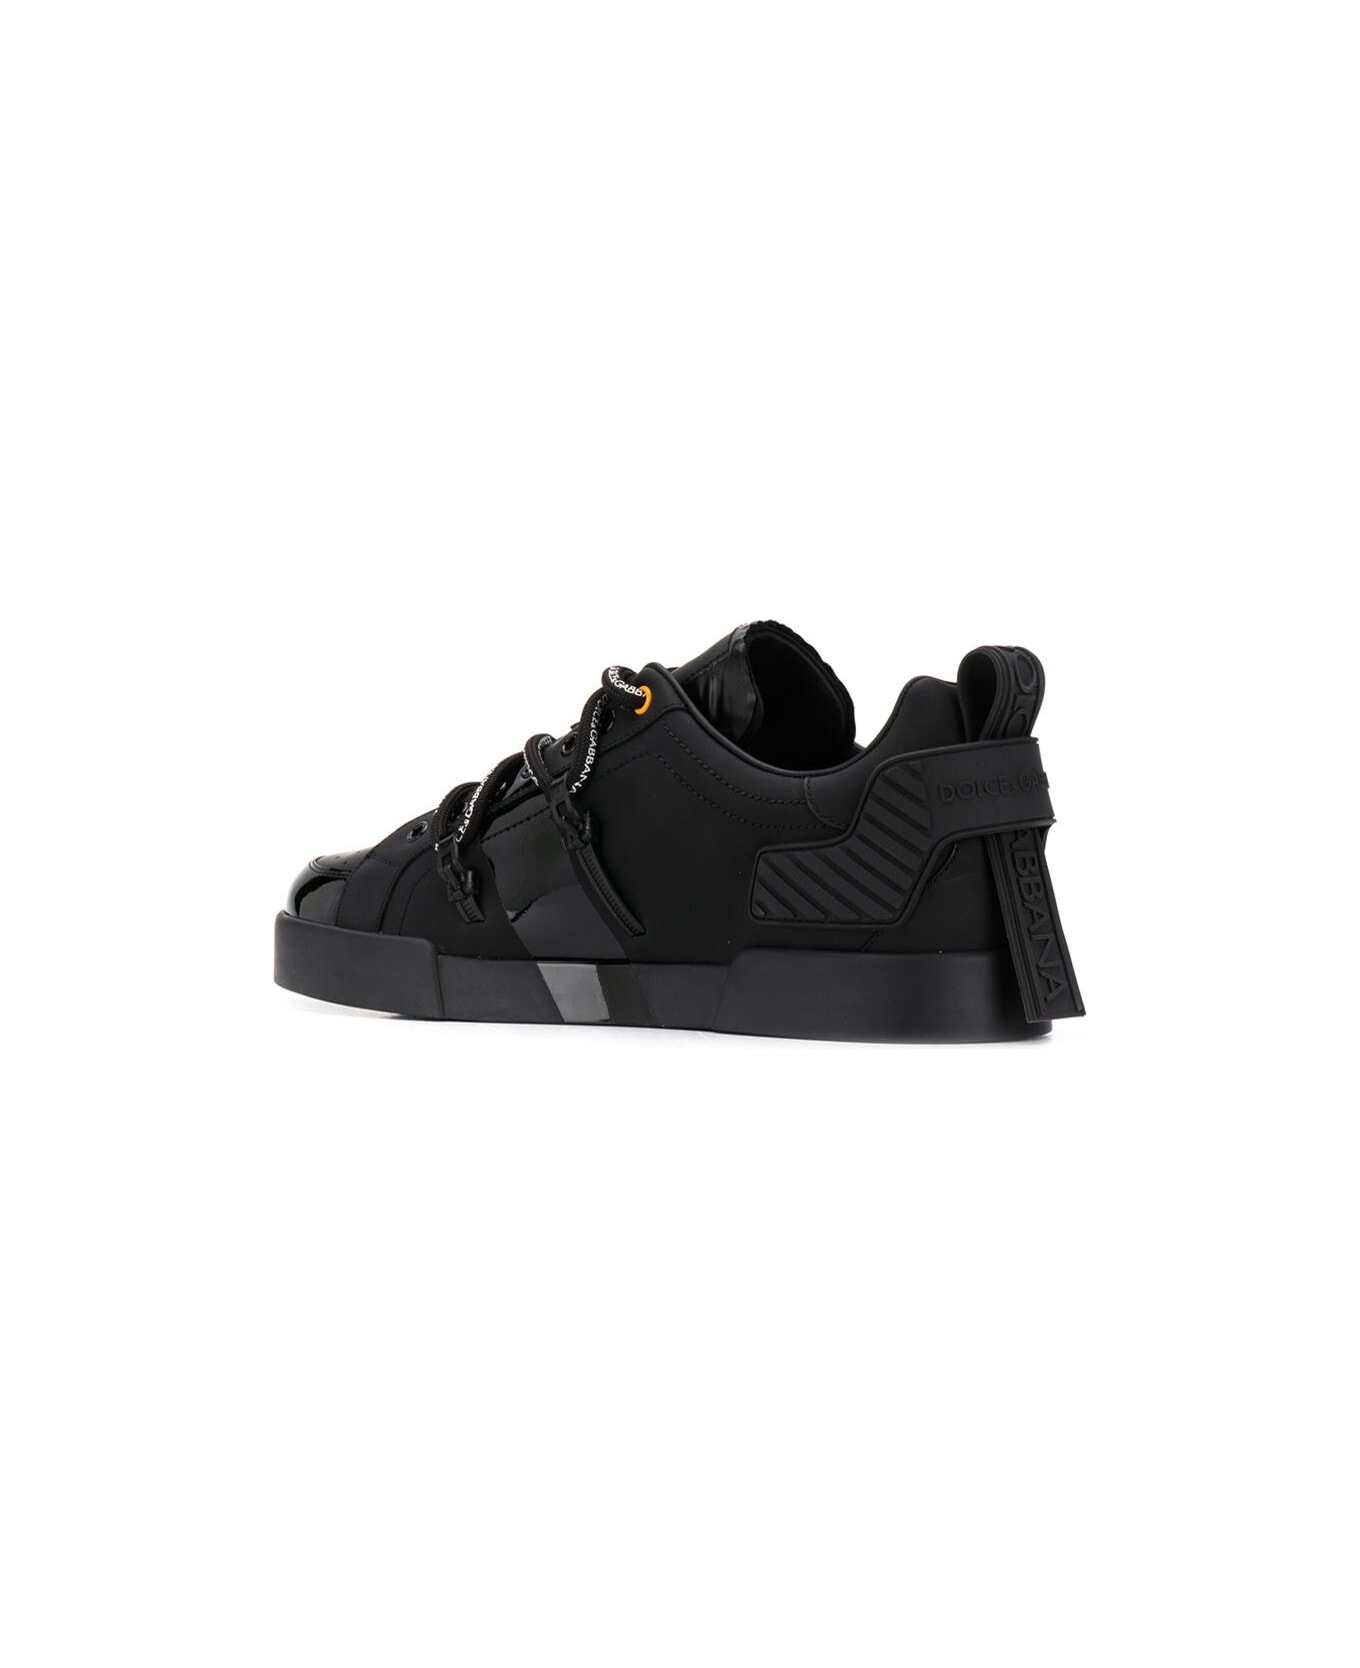 Dolce & Gabbana Man's Portofino Black Leather Sneakers - Black スニーカー